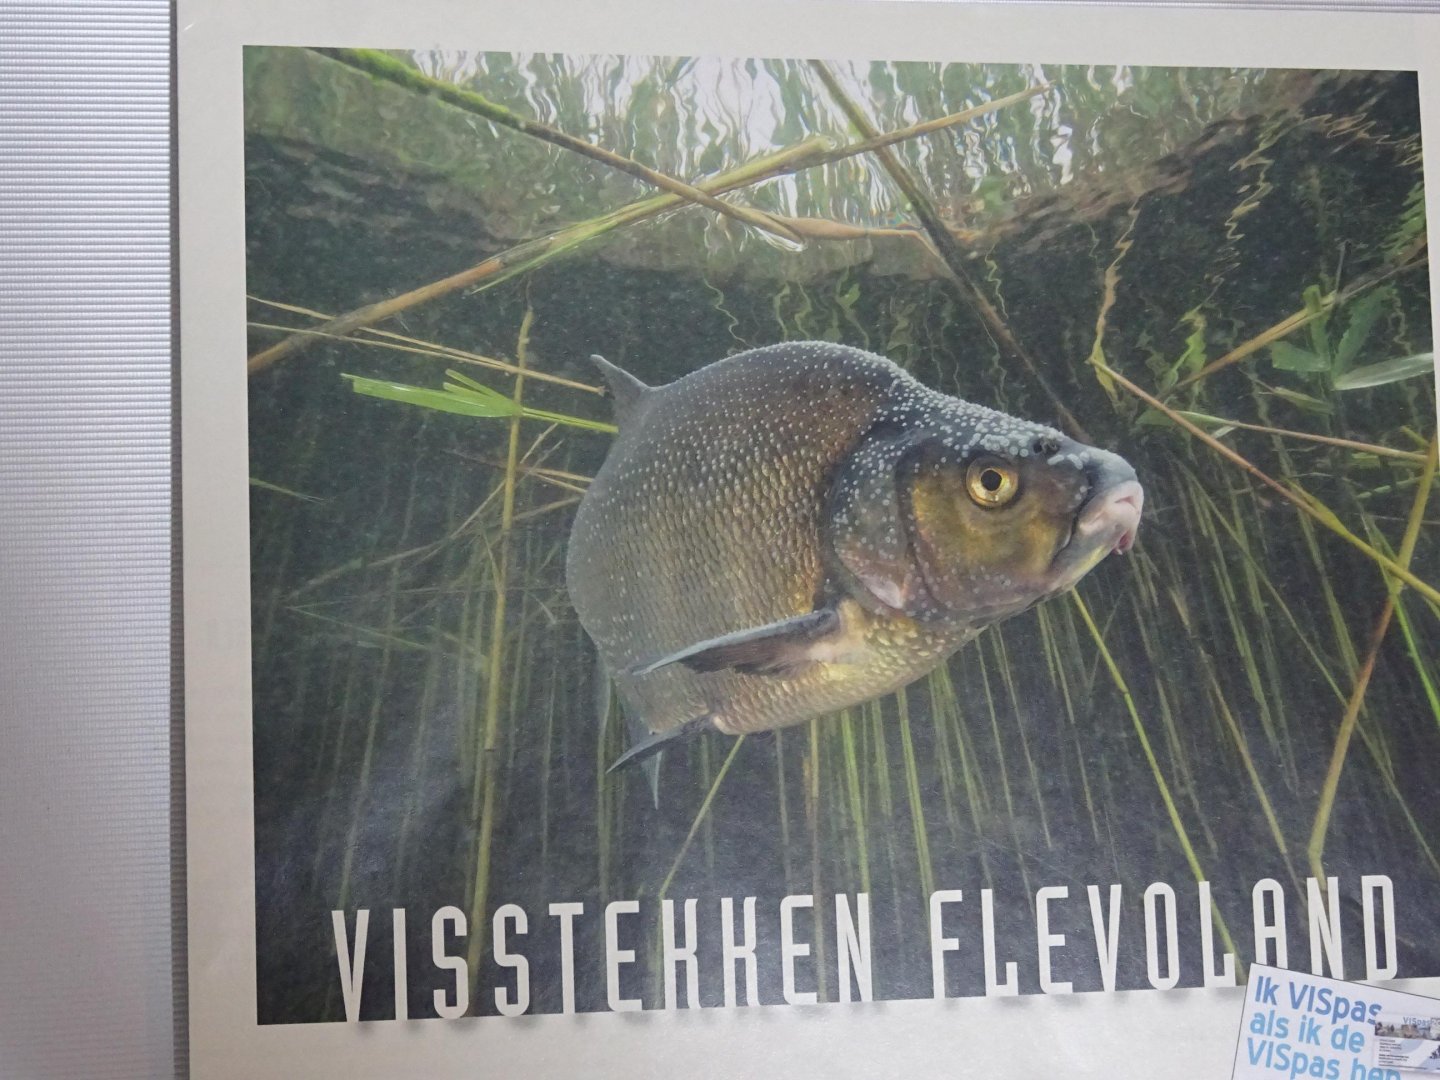 Meijers, Steef (ed.) - Visatlas Flevoland